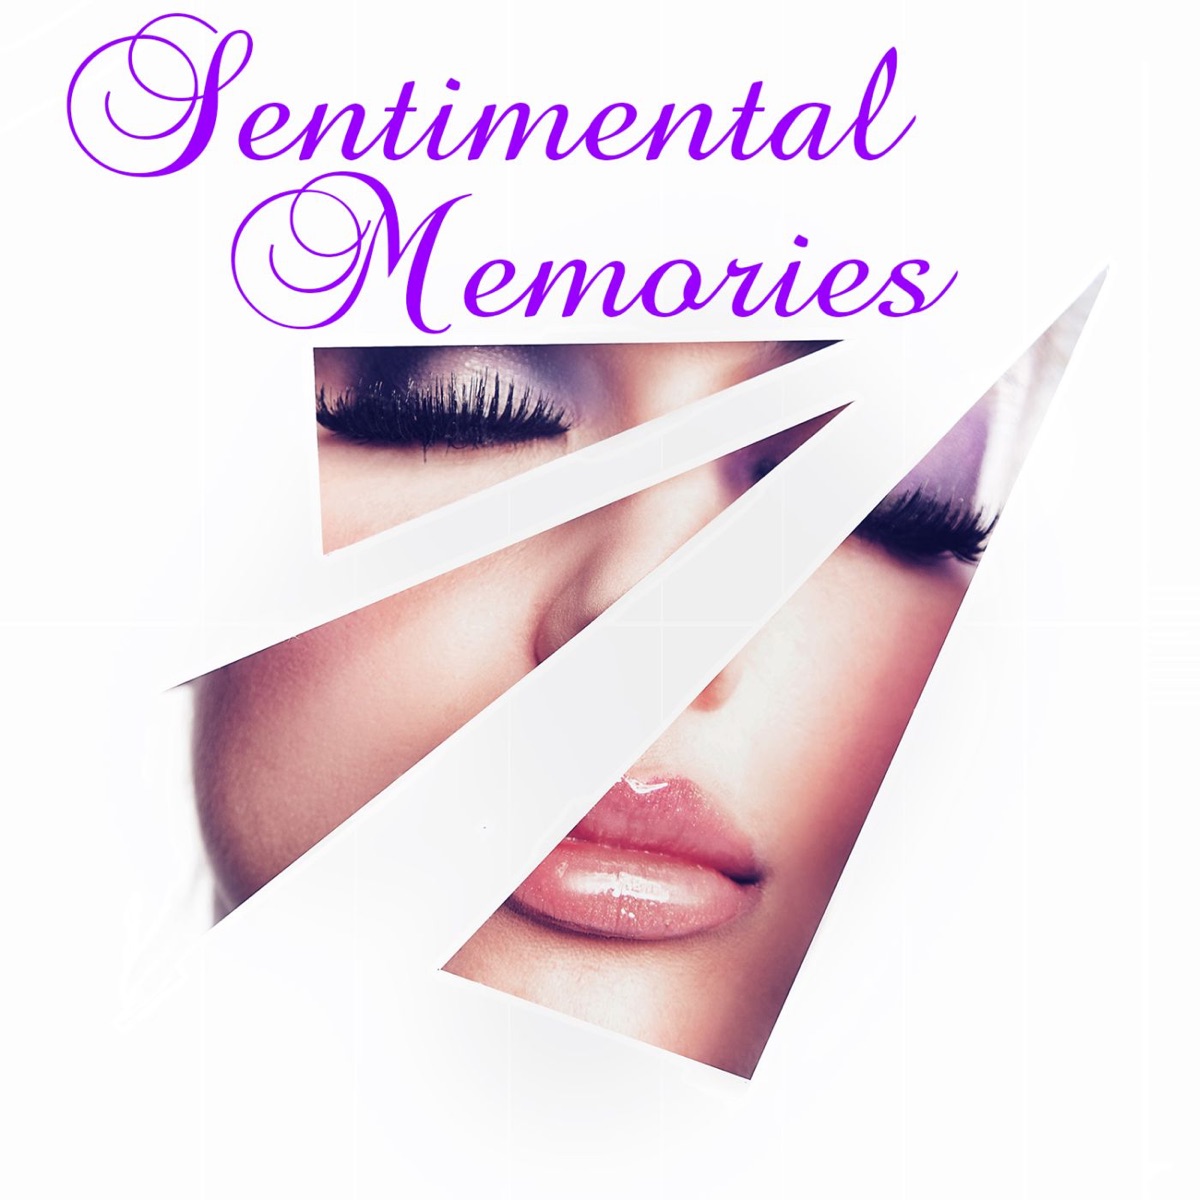 Sentimental Memories - Album by Various Artists - Apple Music